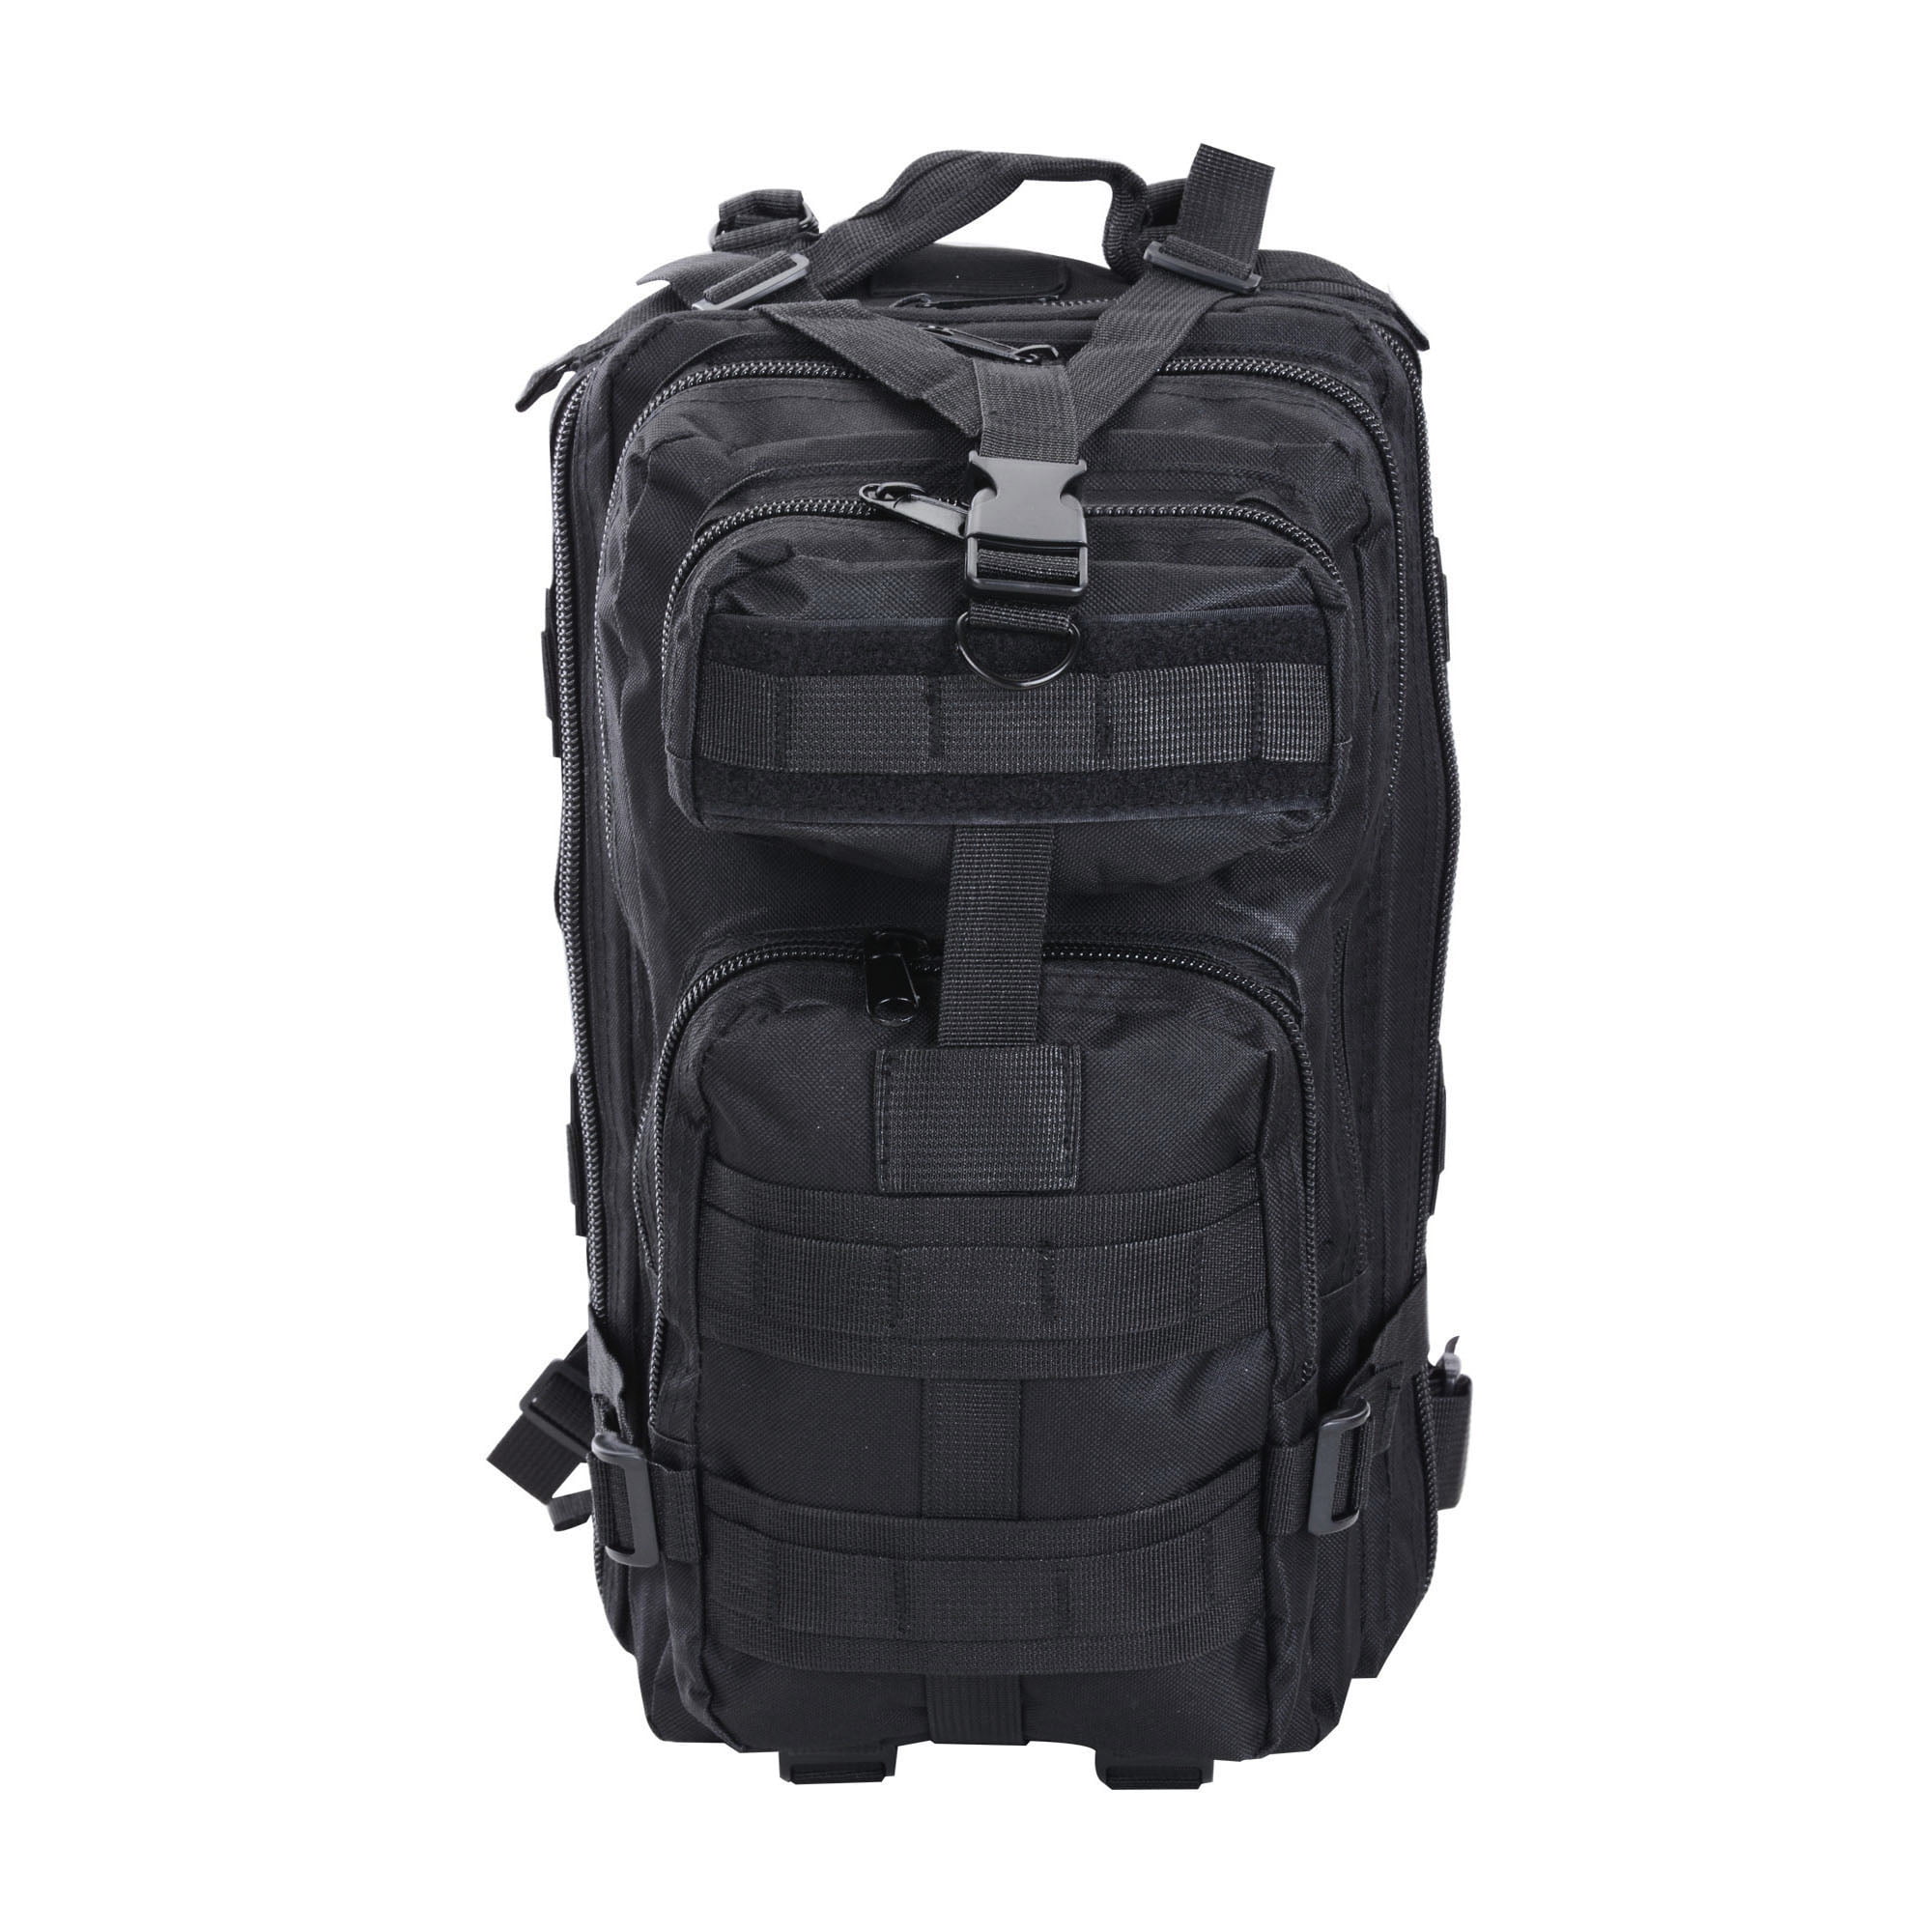 Unisex Large Bag Pack Travel Rucksack Hiking Camping Trekking School College Bag 